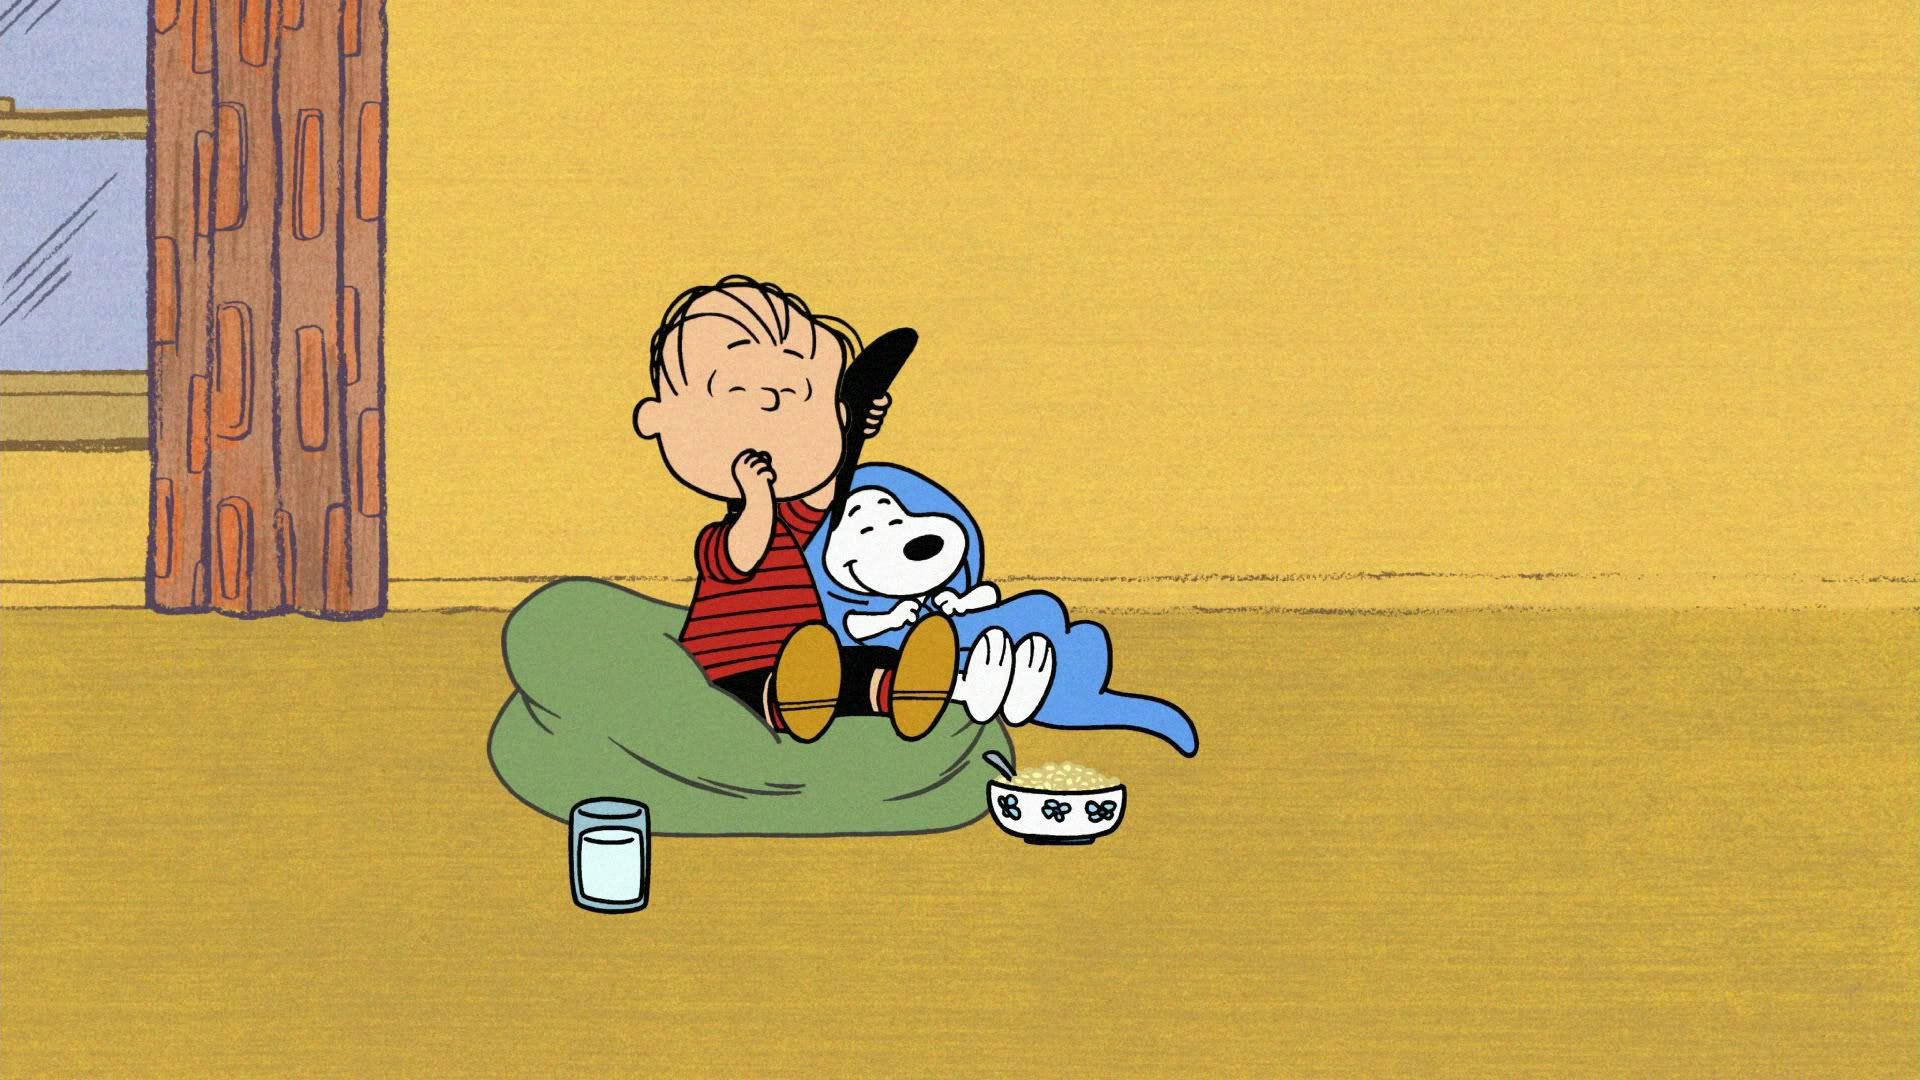 Charlie Brown Snuggling Snoopy Wallpaper